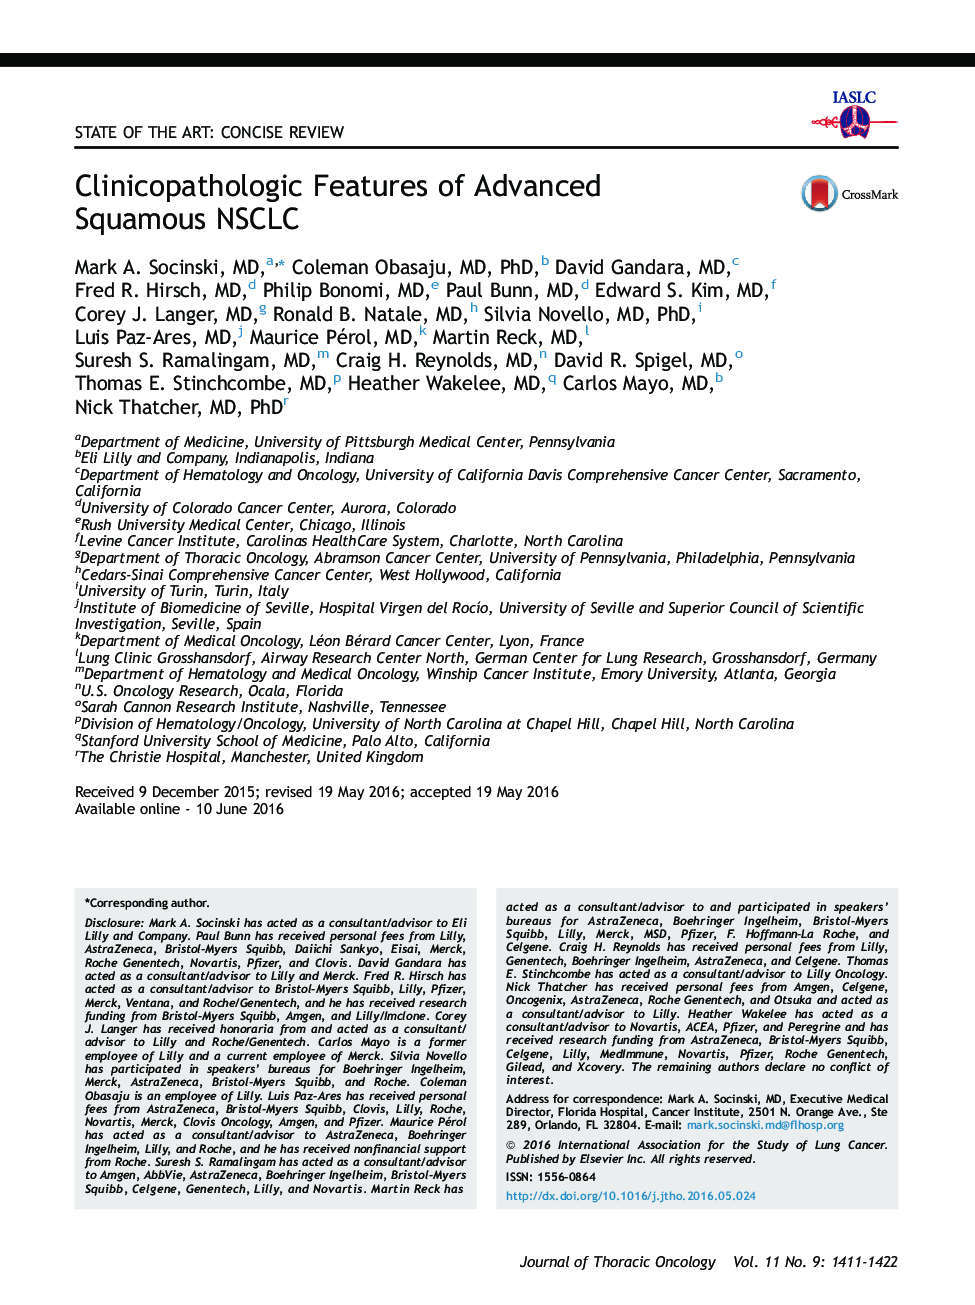 Clinicopathologic Features of Advanced Squamous NSCLC